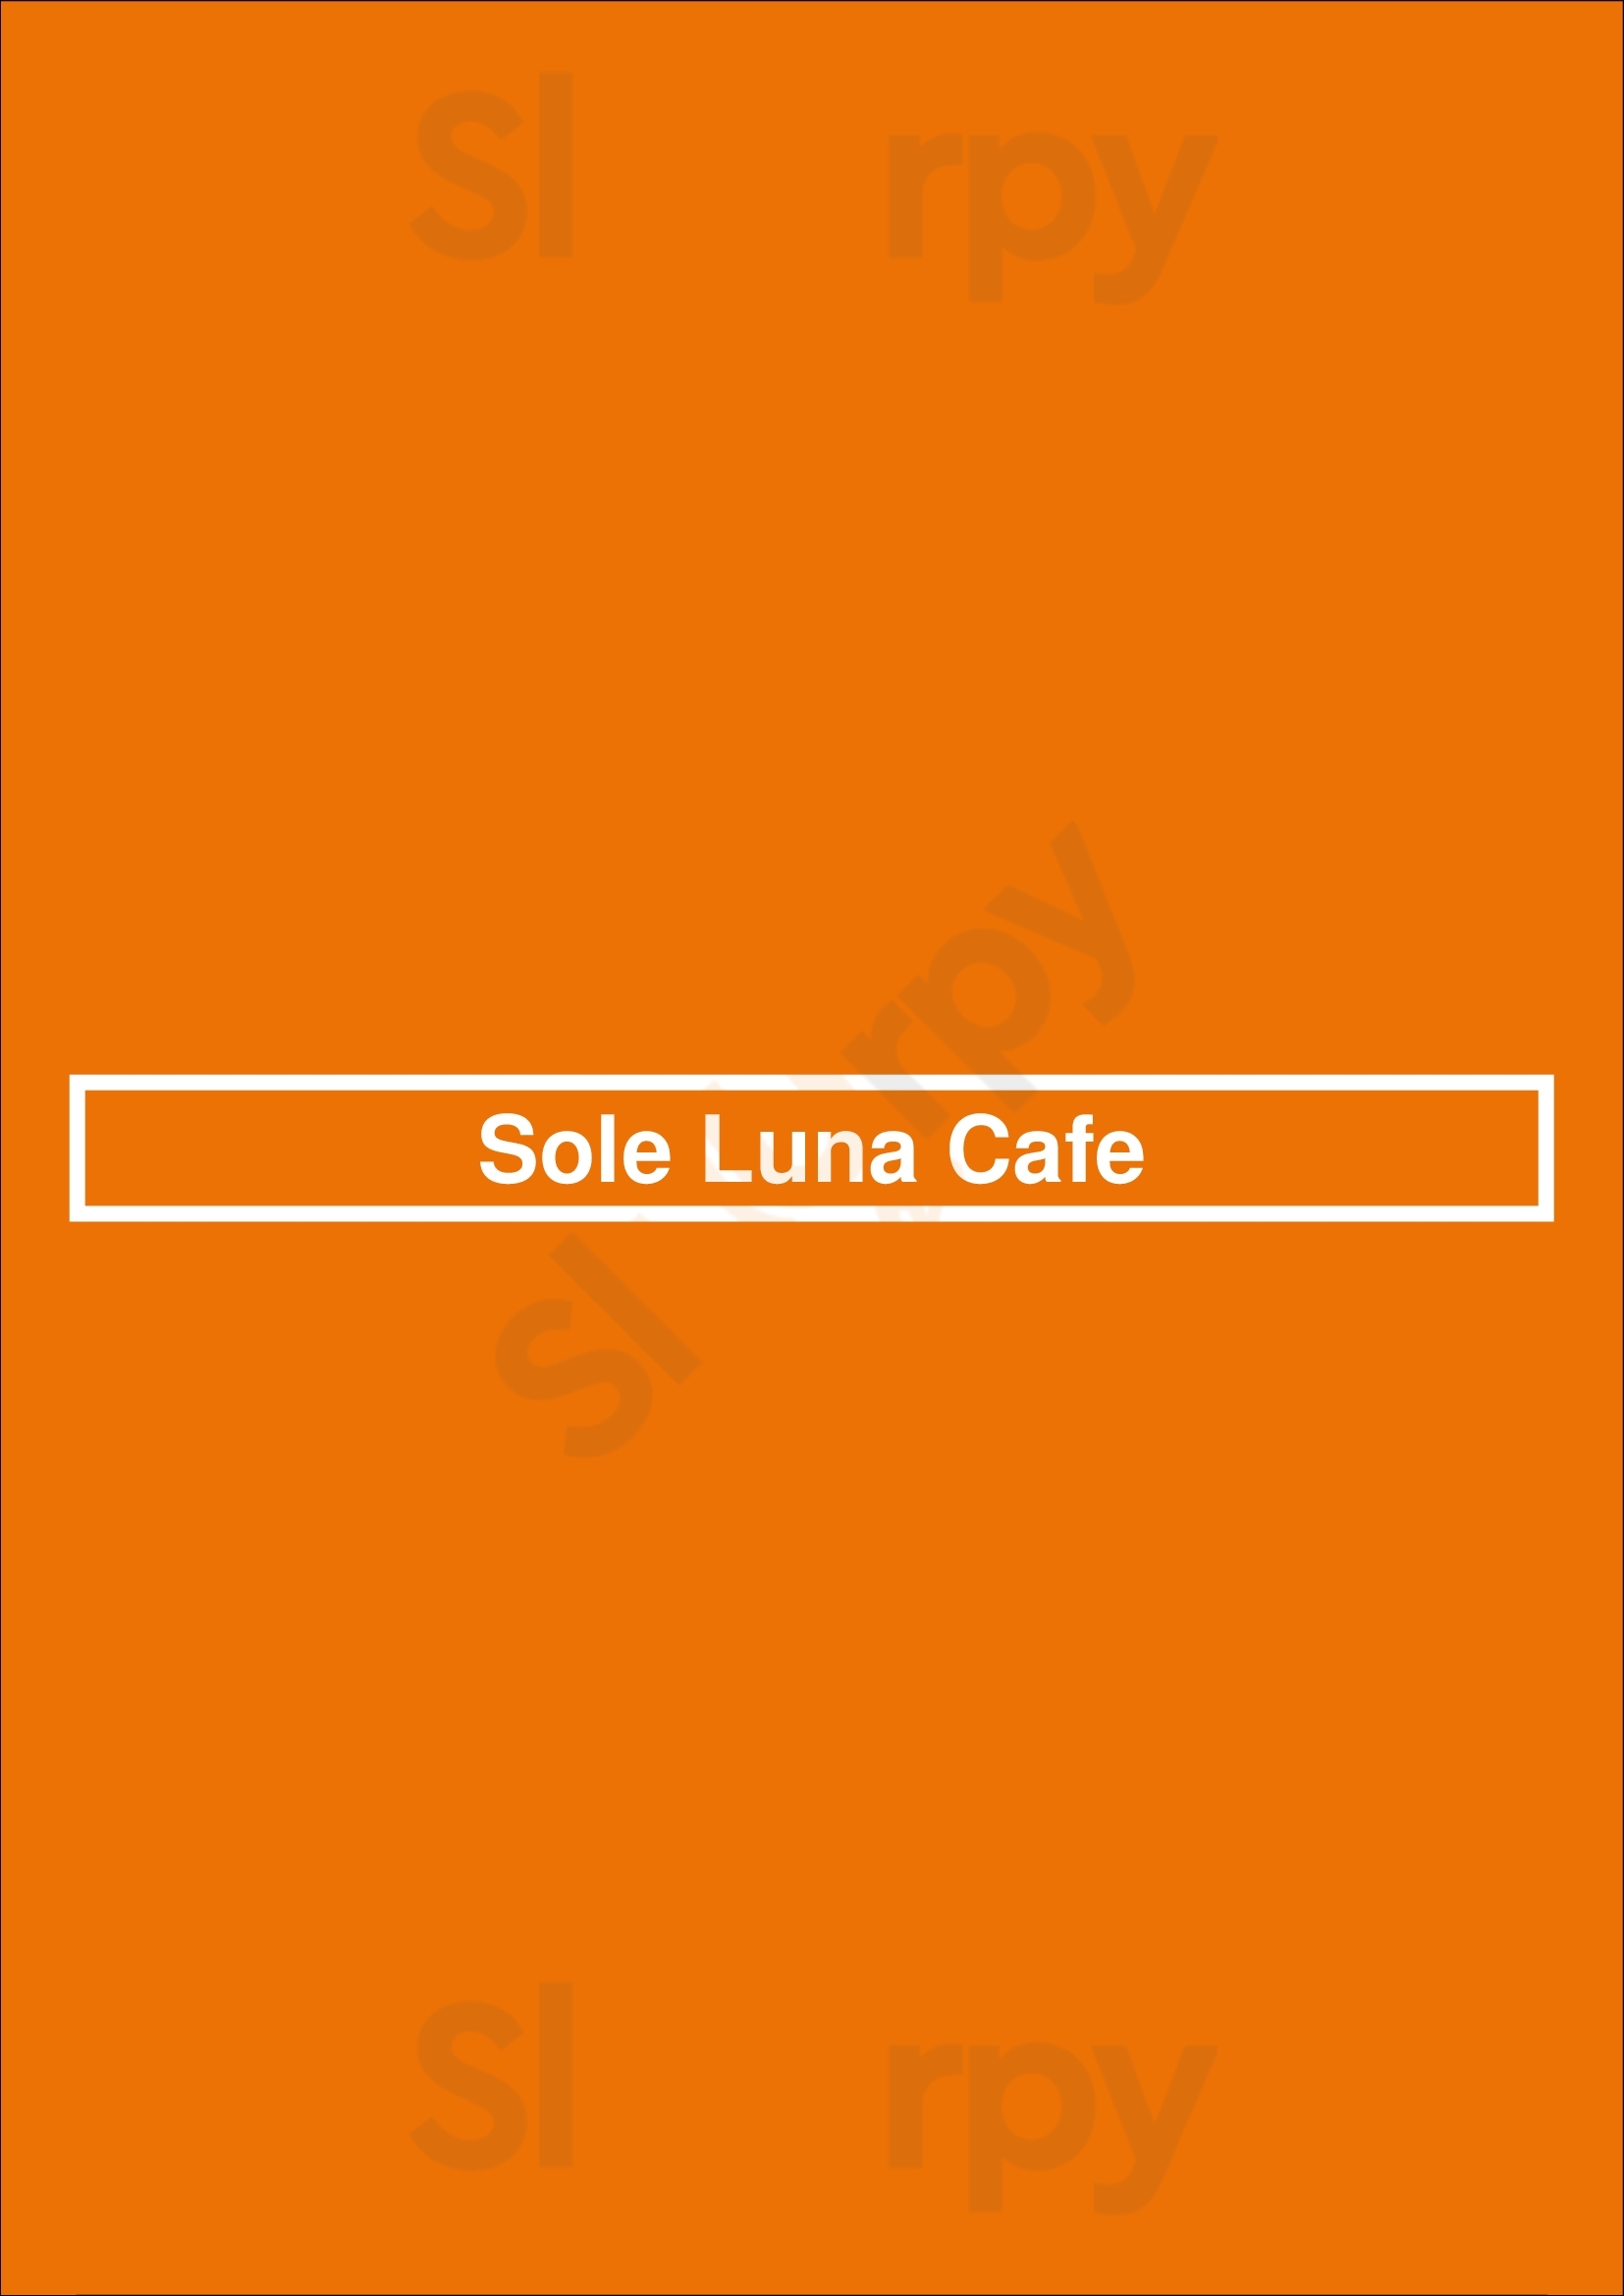 Sole Luna Cafe San Diego Menu - 1